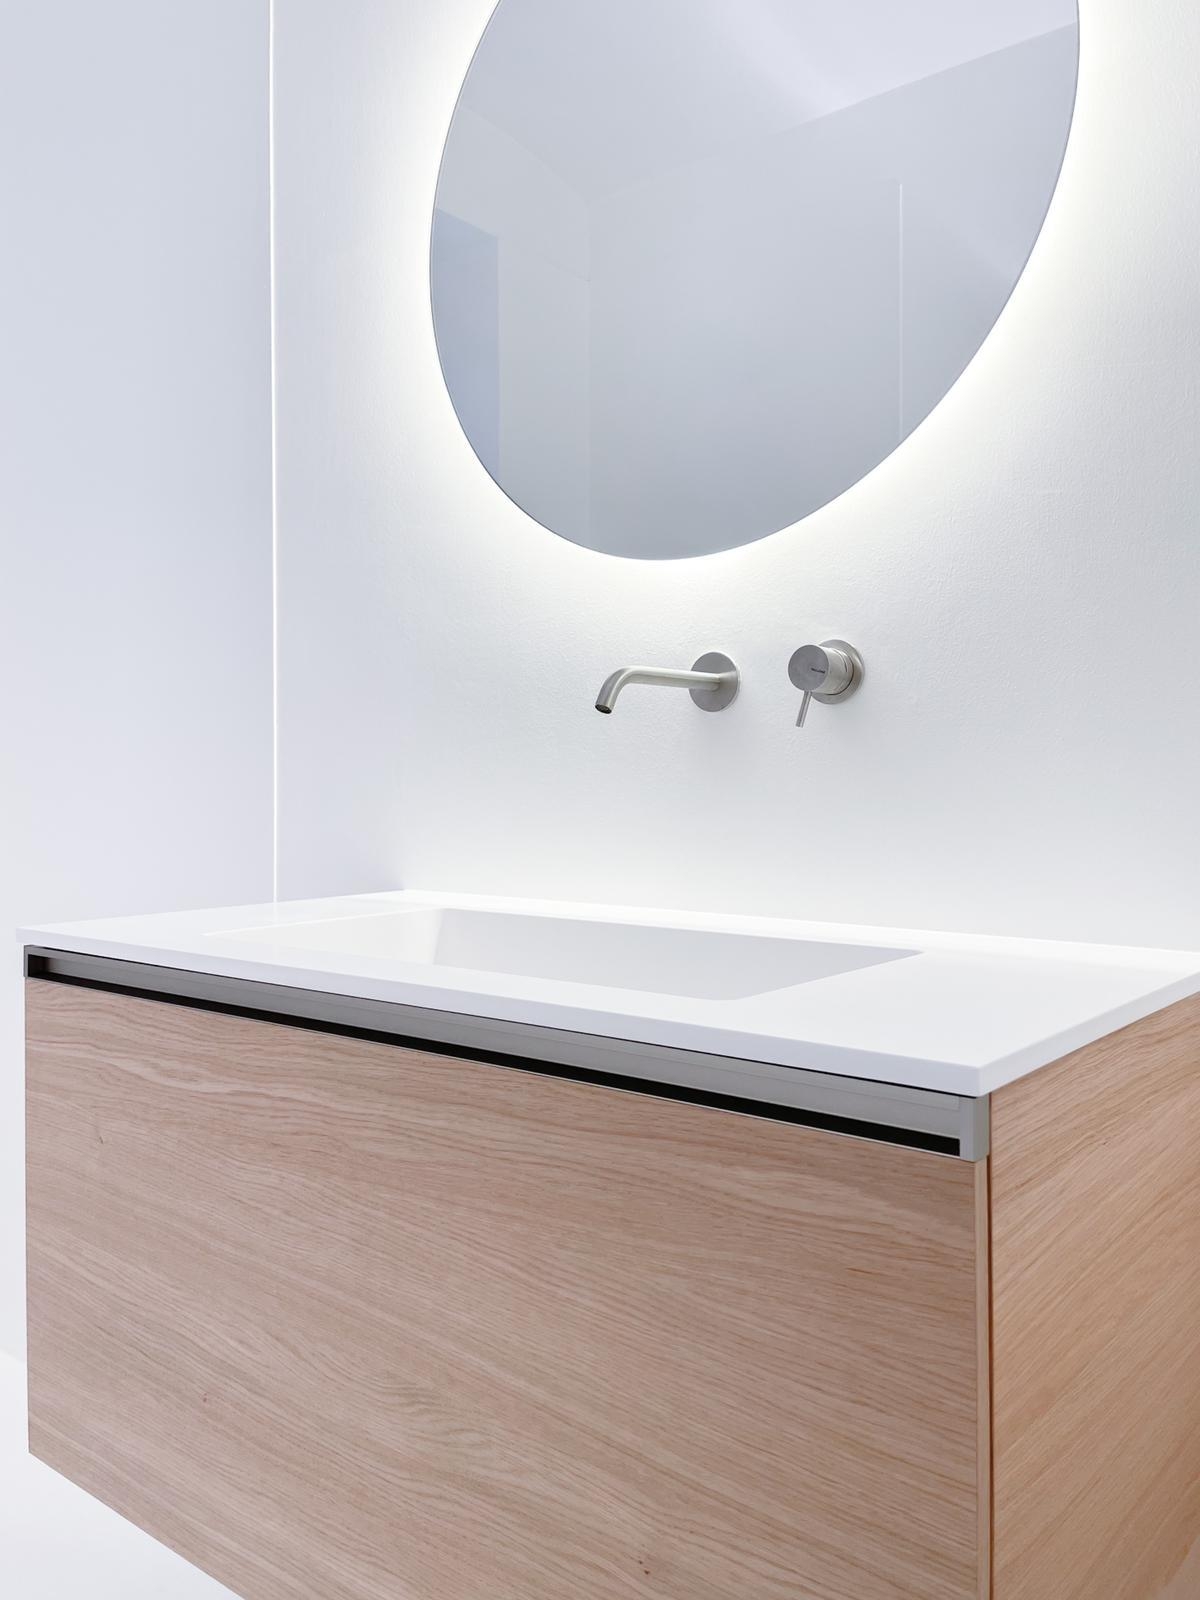 Gästebadezimmer.
#bathroom # scandistyle #minimalism #whiteliving #whitehome 